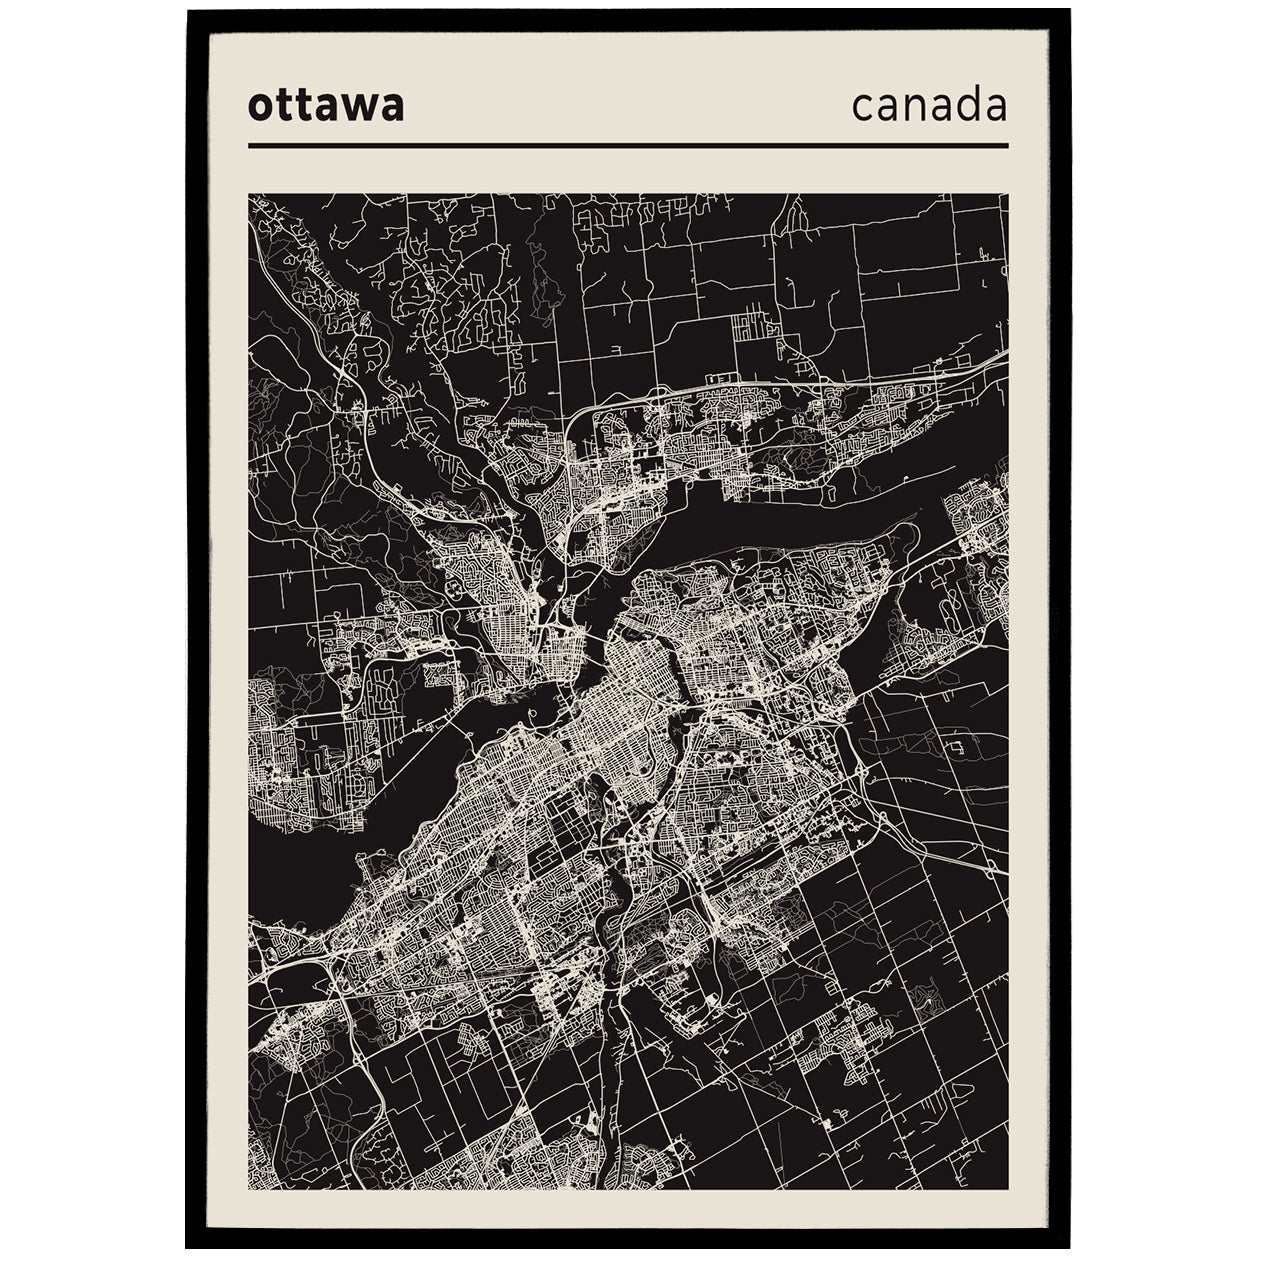 Ottawa Map Poster - Canada